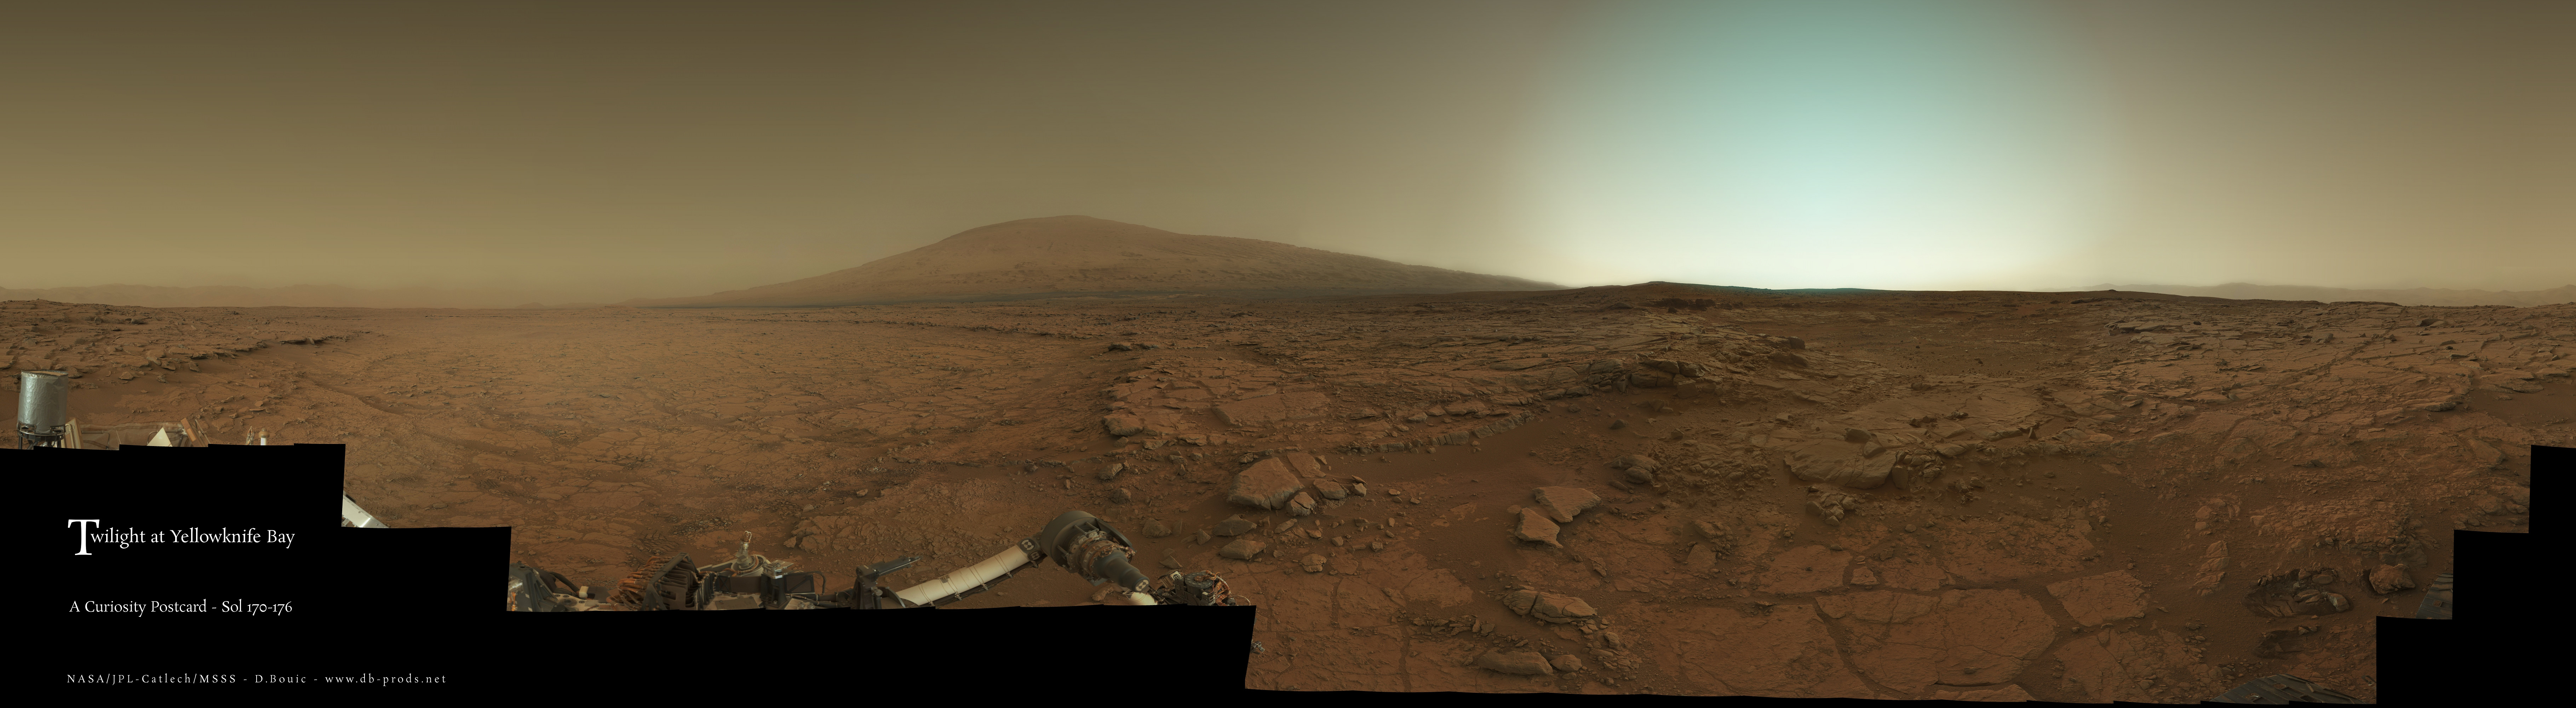 Mars Surface Image Thecelebritypix